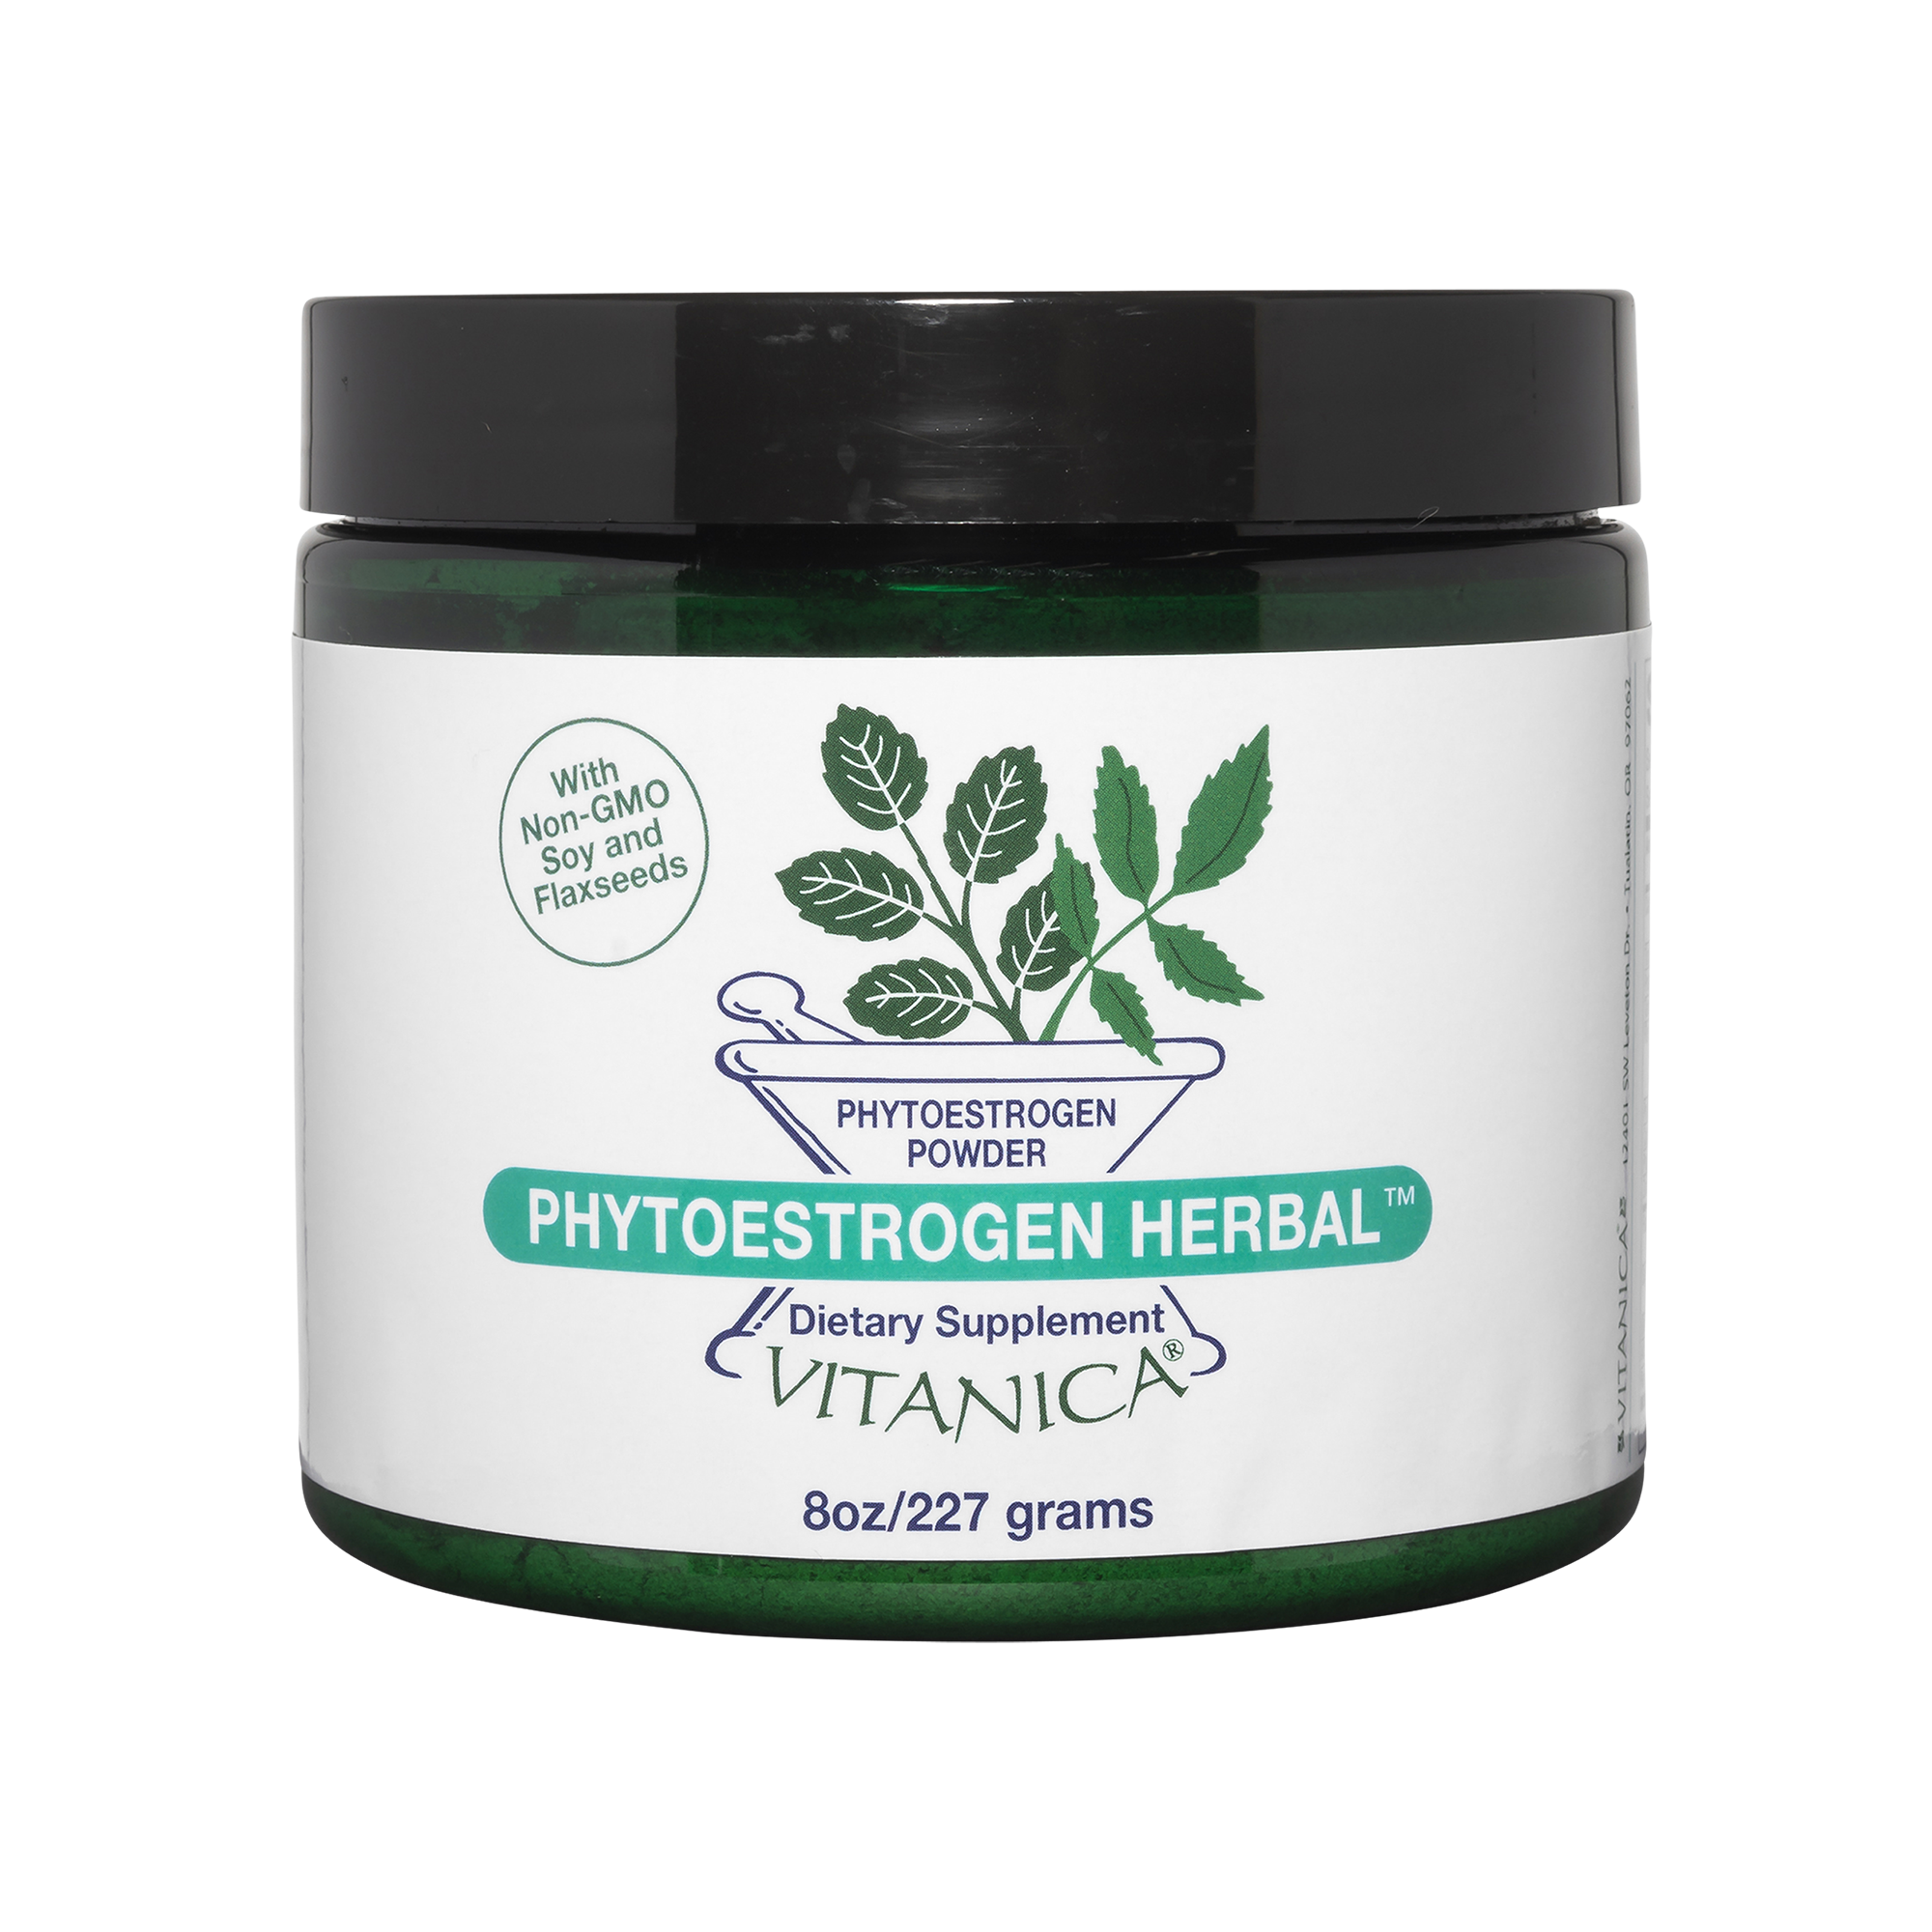 PhytoEstrogen Herbal™ ~ Phytoestrogen Powder ~ 8 ounces  VitanicaPro